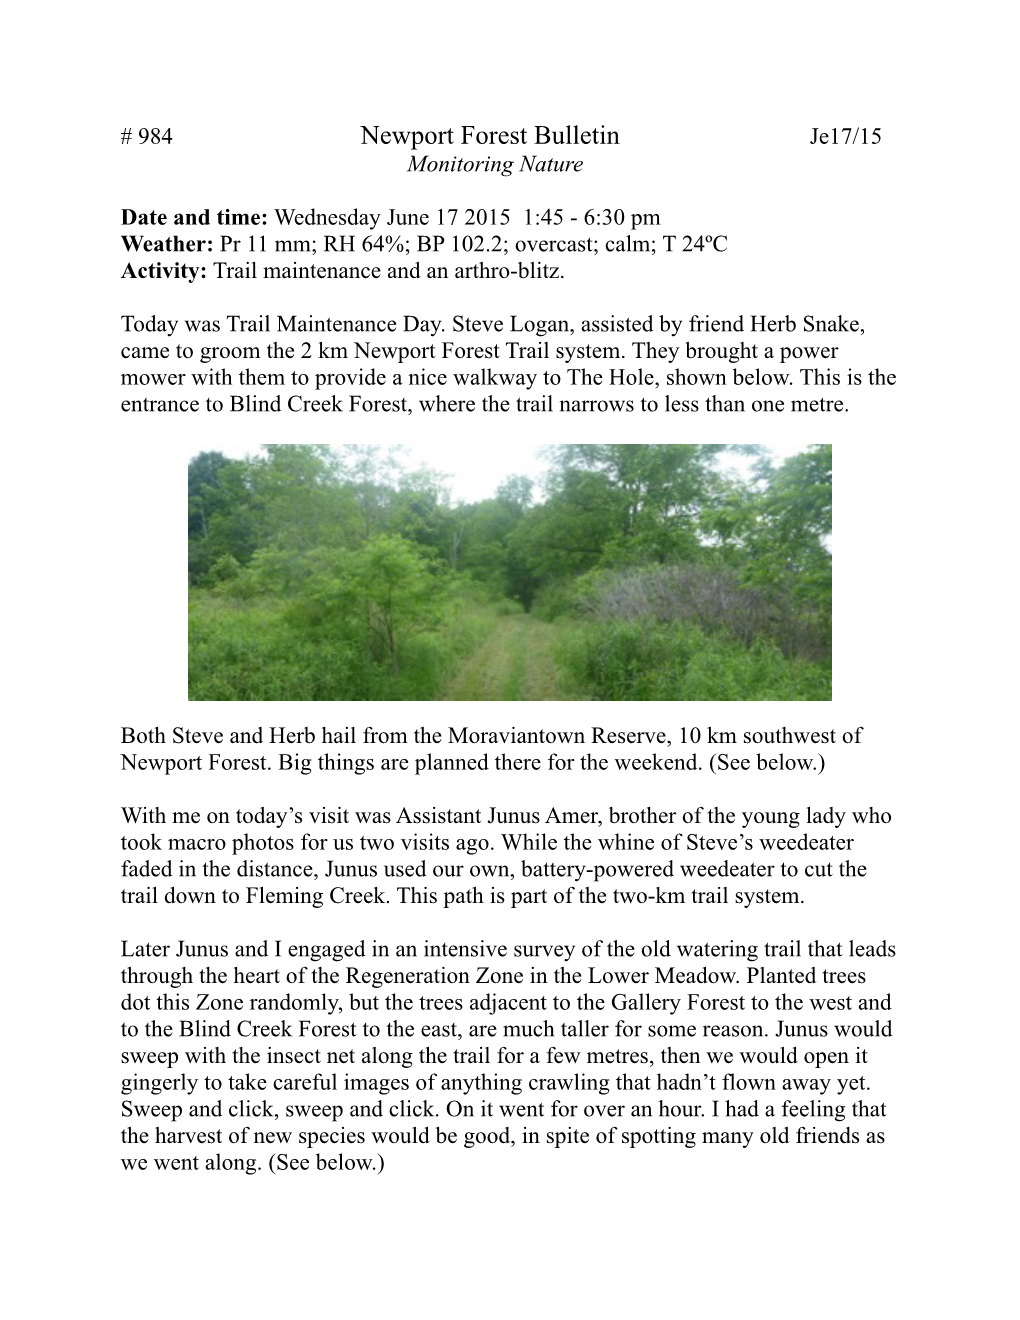 Newport Forest Bulletin